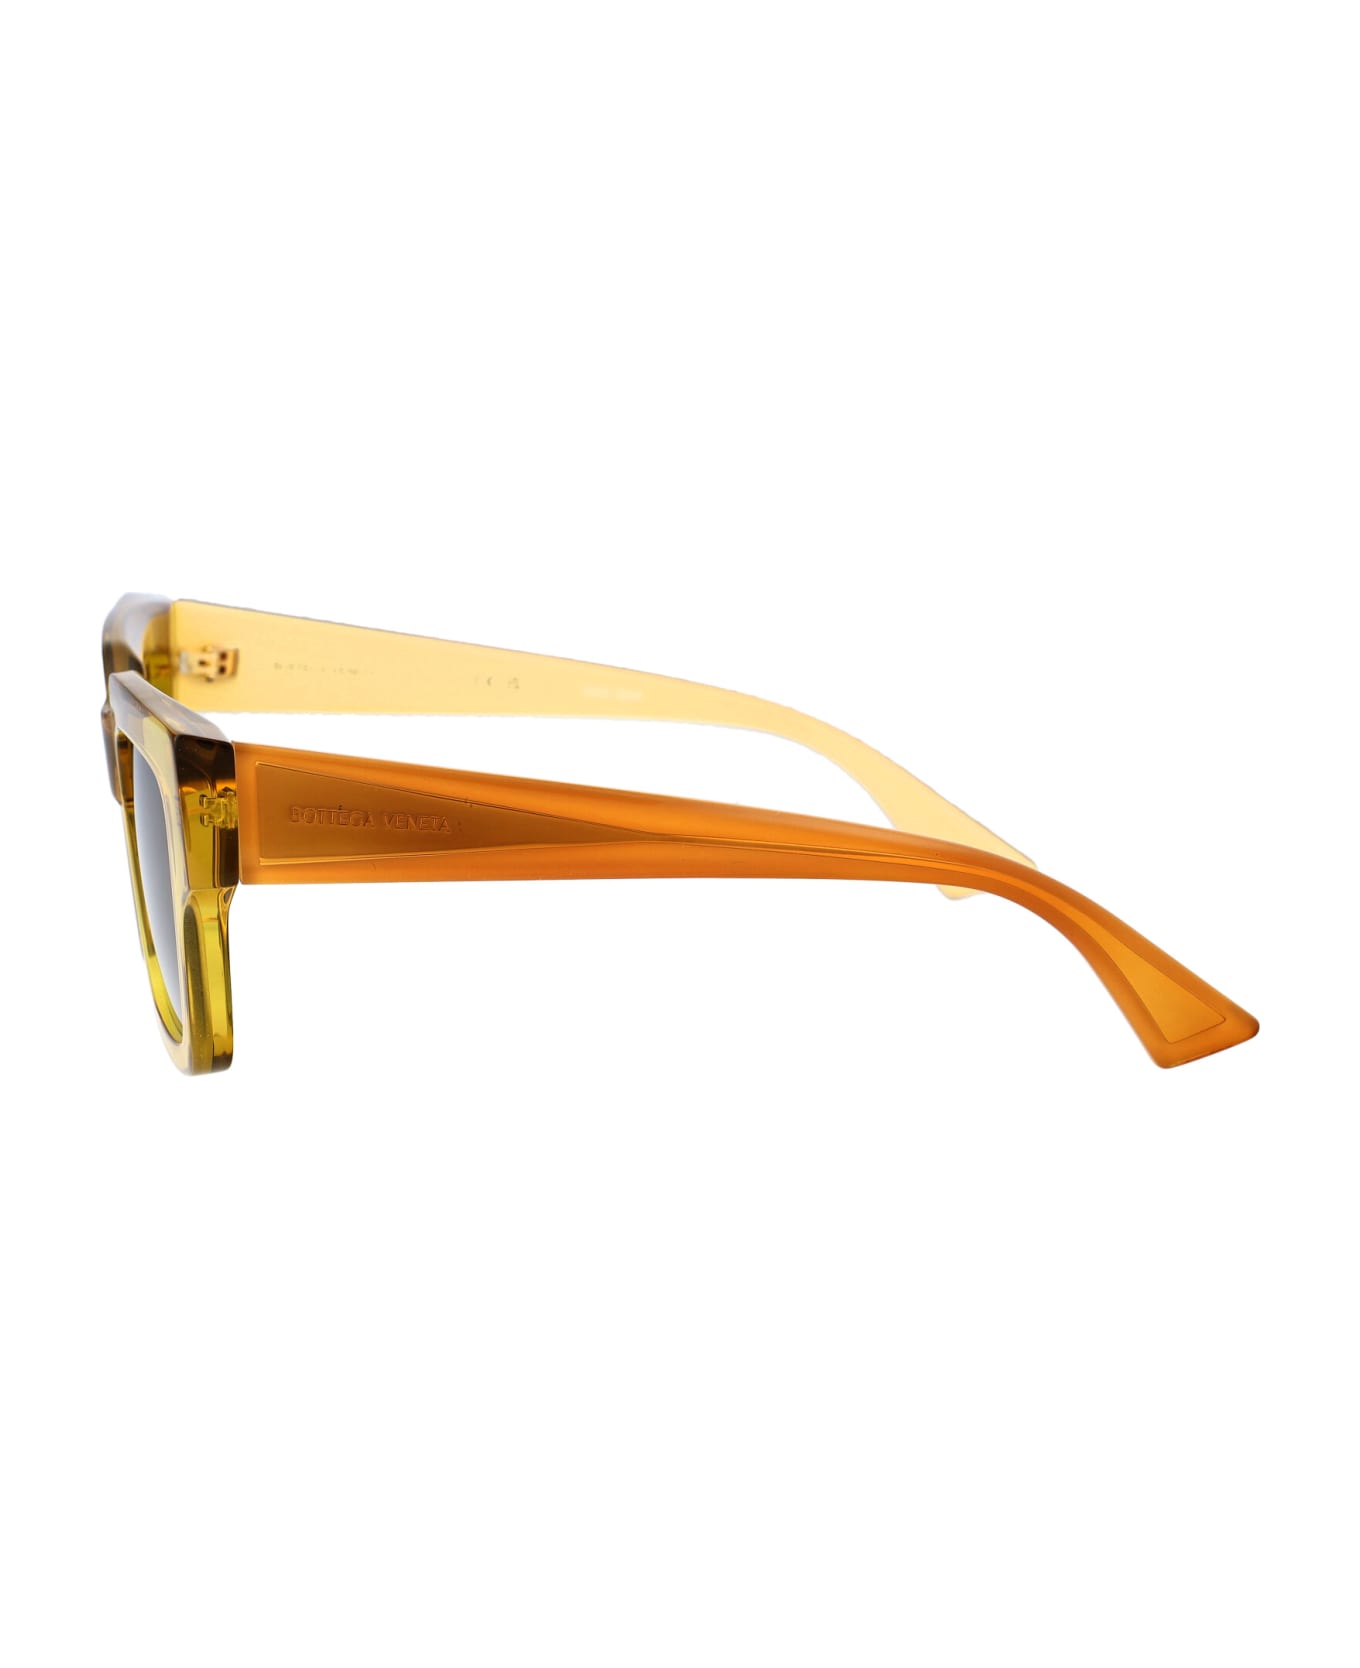 Bottega Veneta Eyewear Bv1276s Sunglasses - 004 YELLOW YELLOW BROWN